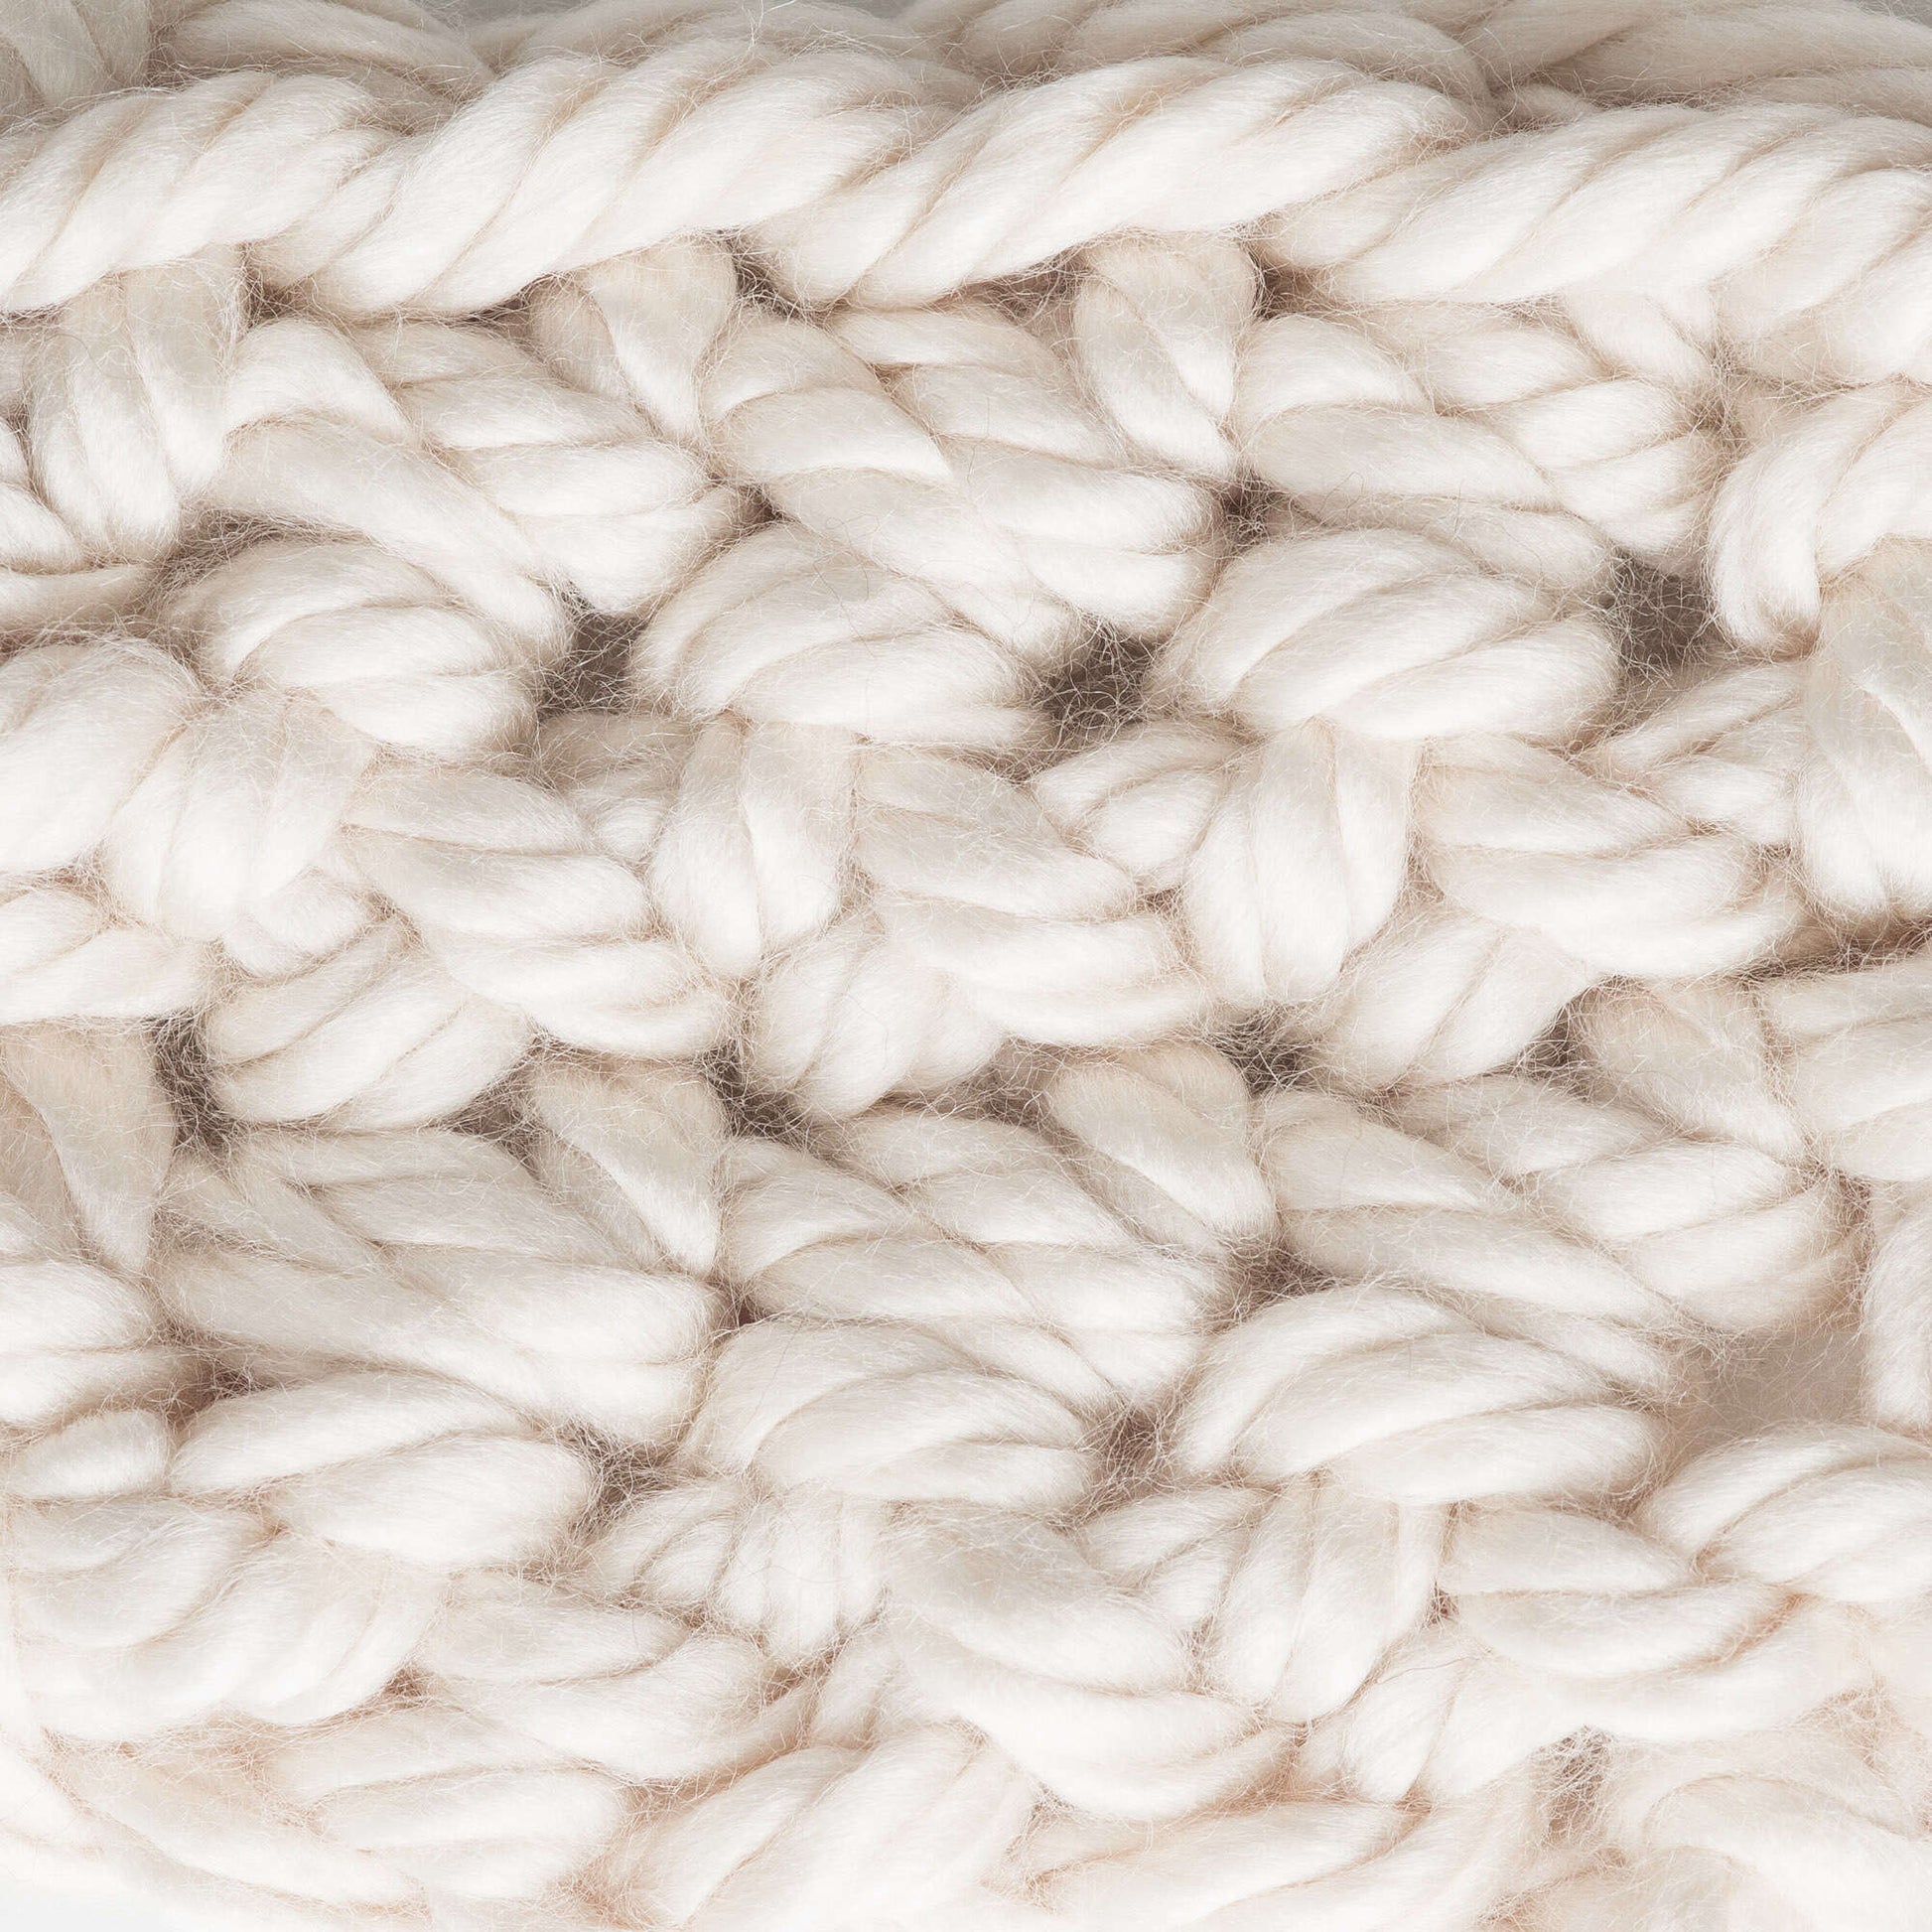 Chunky Yarn Of Acrylic/wool, L: 15 m, Mega , Off-white, 300 G, 1 Ball